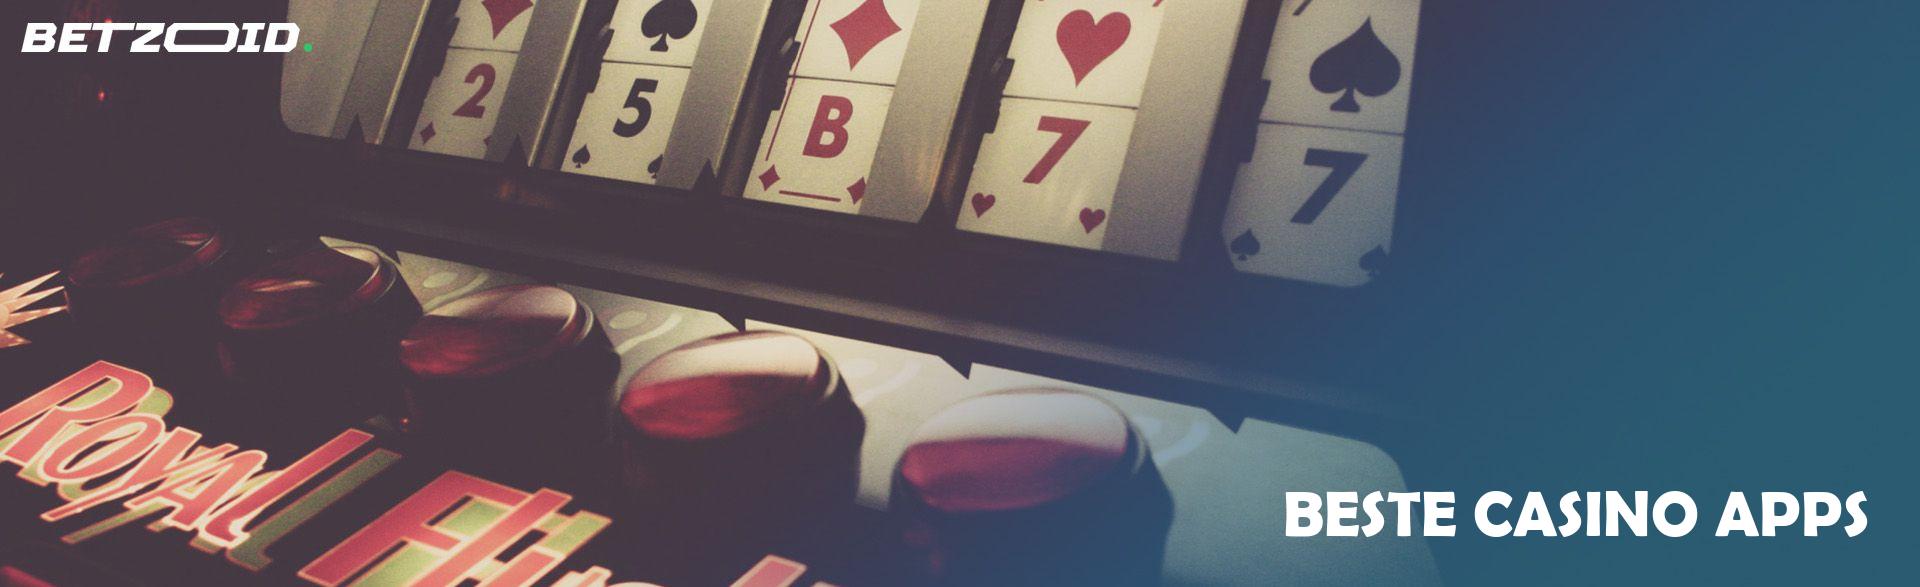 Beste Casino Apps.